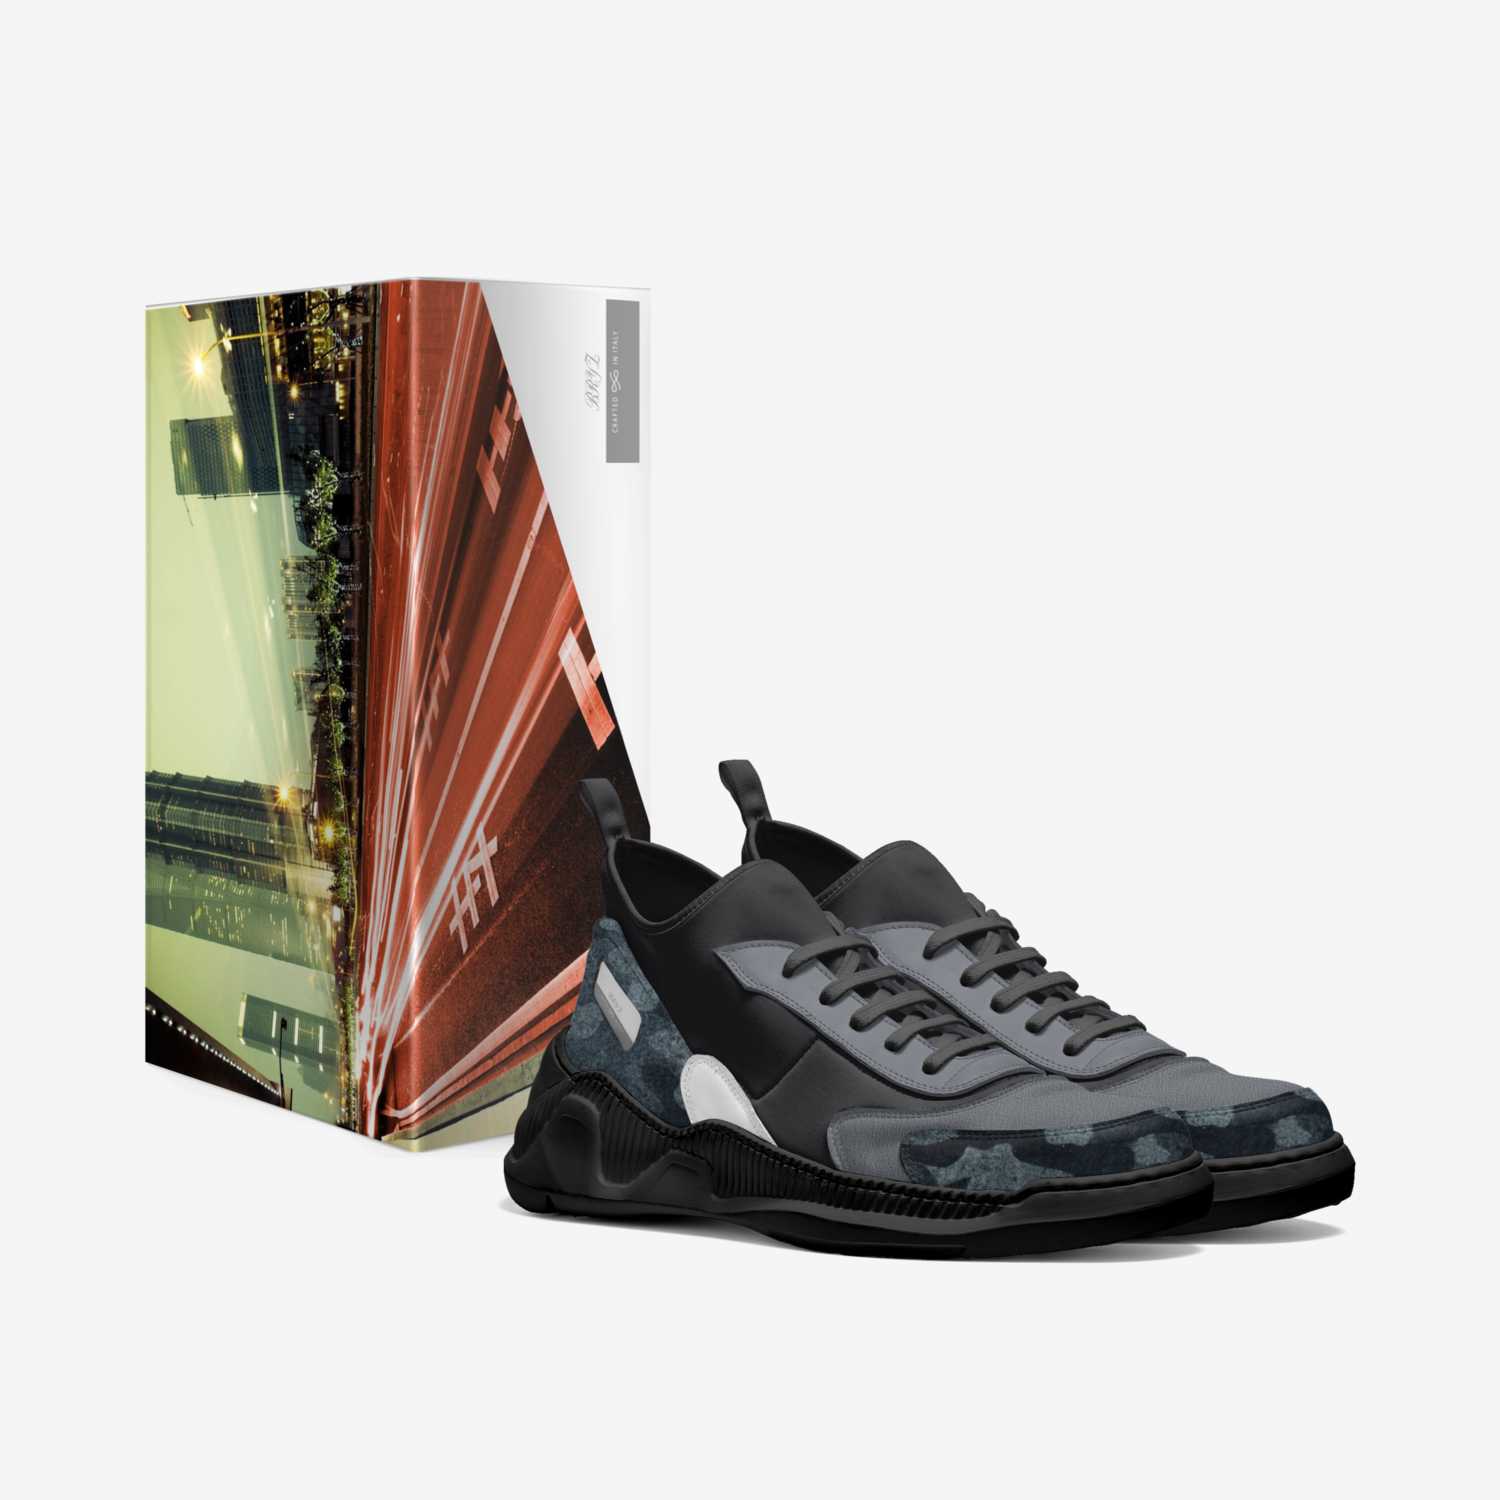 BRYZ custom made in Italy shoes by Bryan Davis | Box view